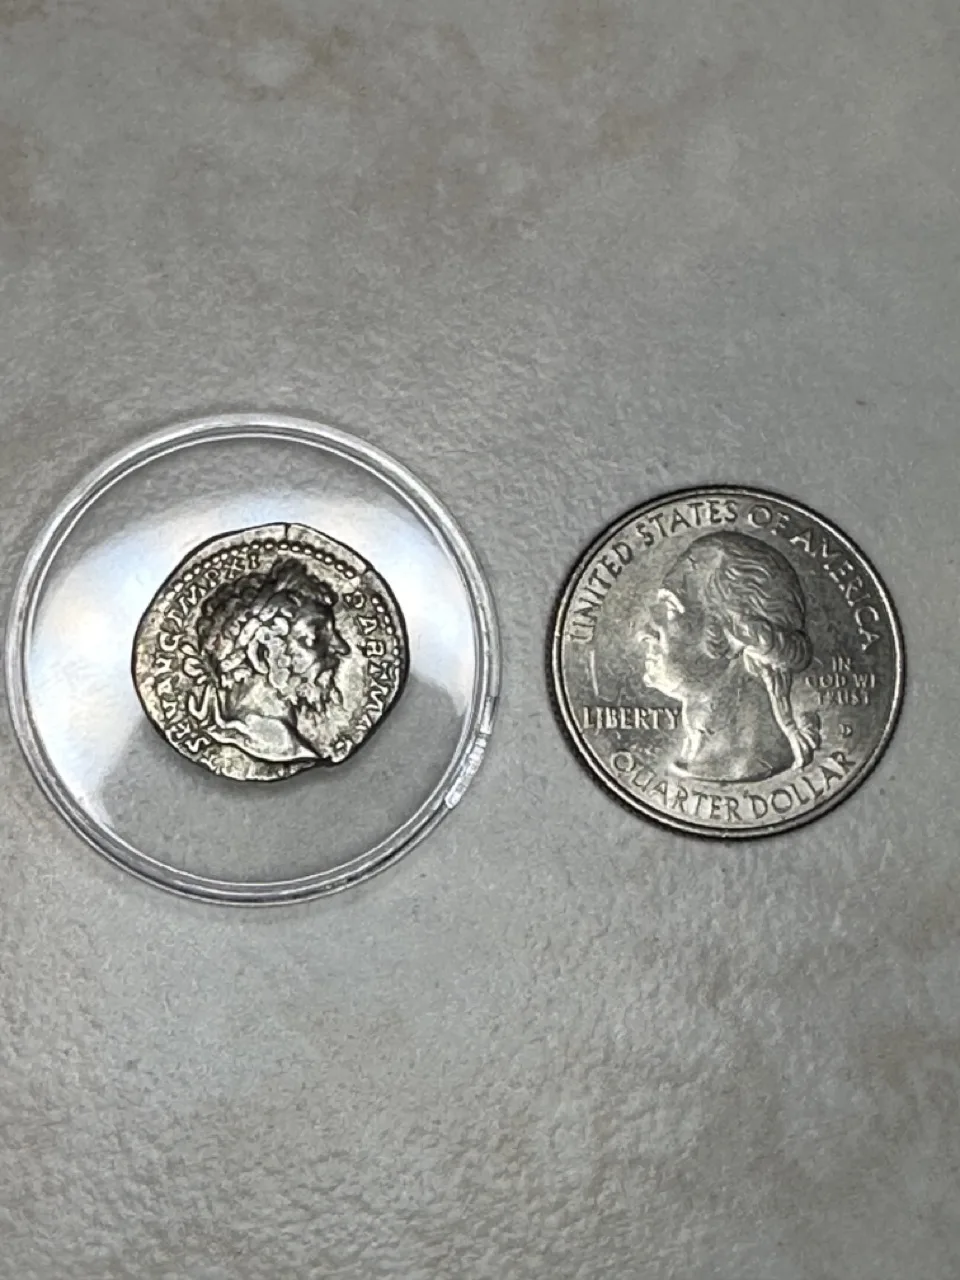 Roman Coin, 95-98% Silver, Gorgeous detail Prehistoric Online